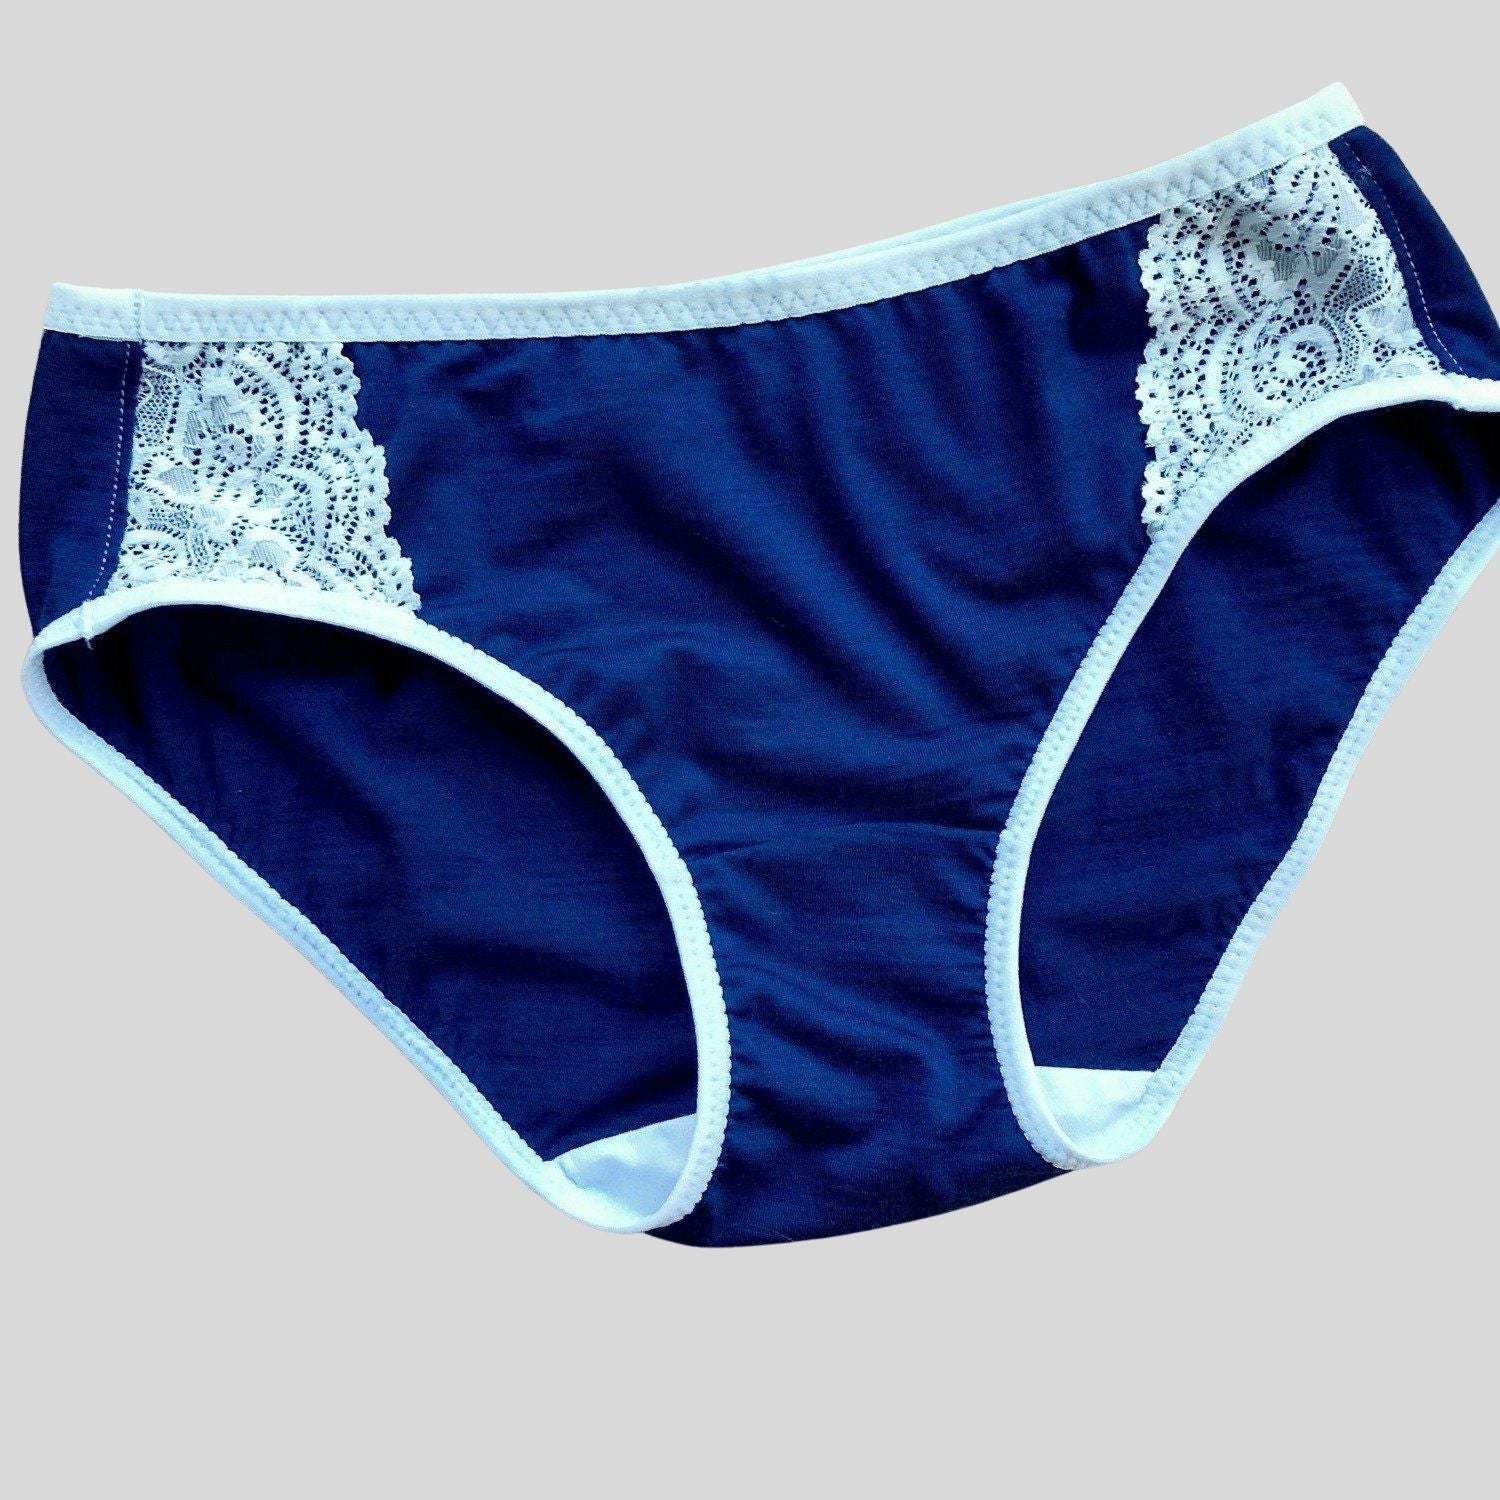 Merino wool underwear brief for women  Made in Canada lingerie shop –  econica